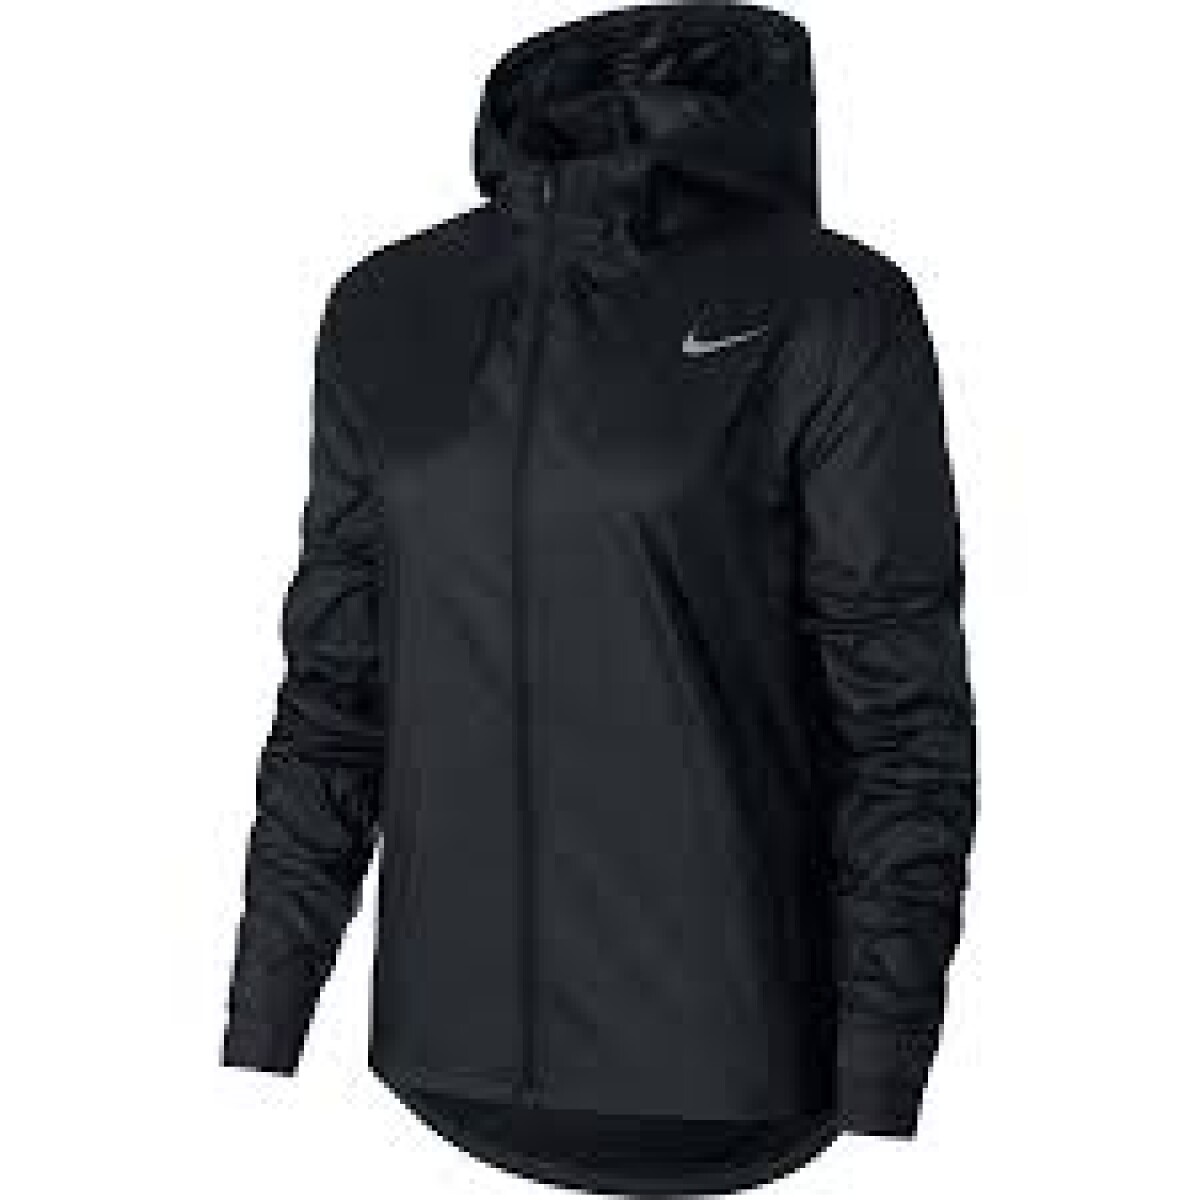 Campera Nike Running Dama Essential Jacket Black/(REFLECTIVE SILV) - S/C 